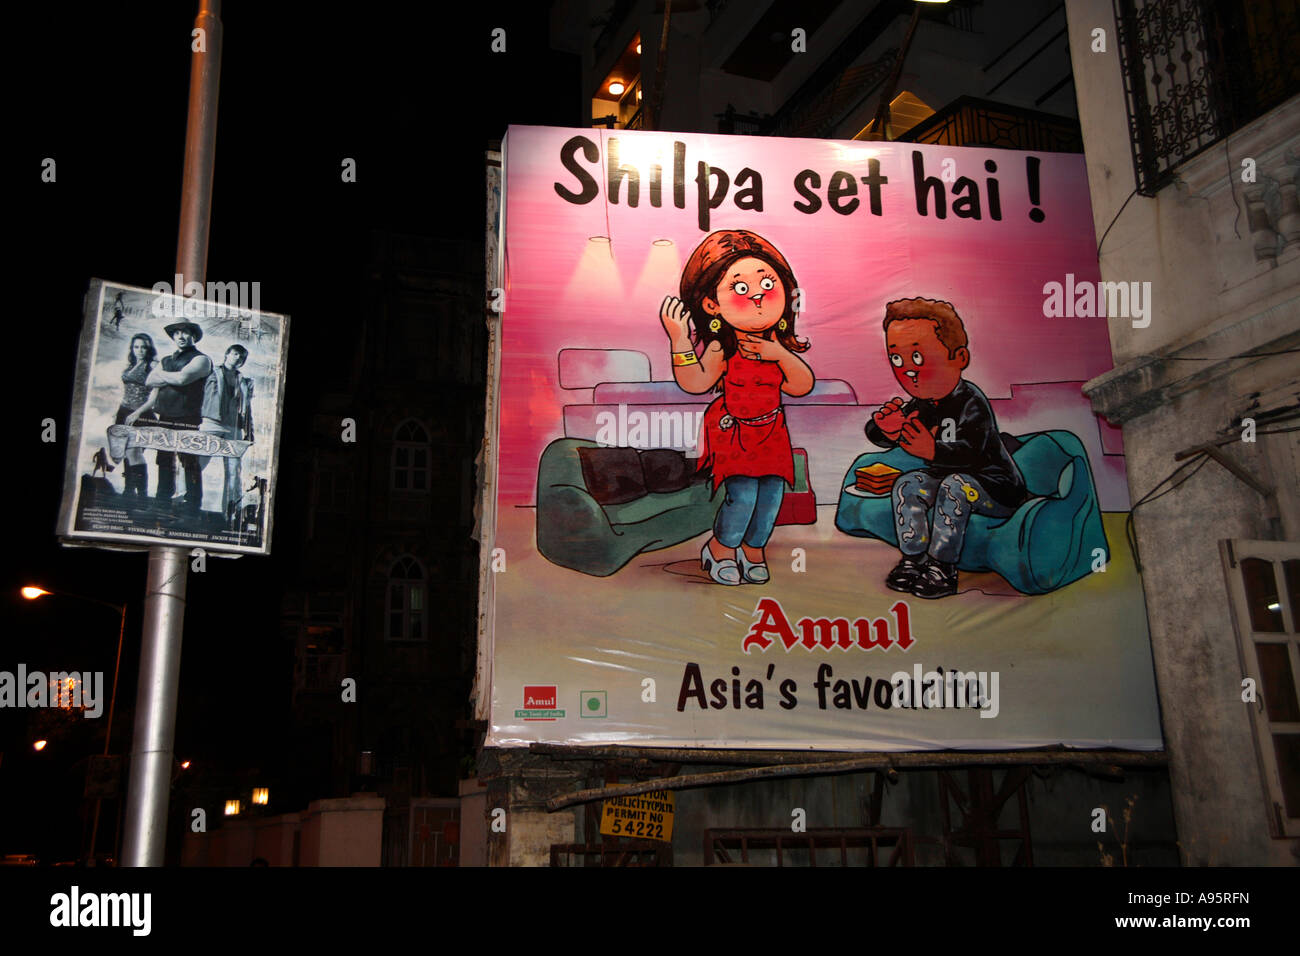 Mumbai avec Shilpa Shetty après son apparence Celebrity Big Brother au Royaume-Uni, Mumbai, Inde Banque D'Images